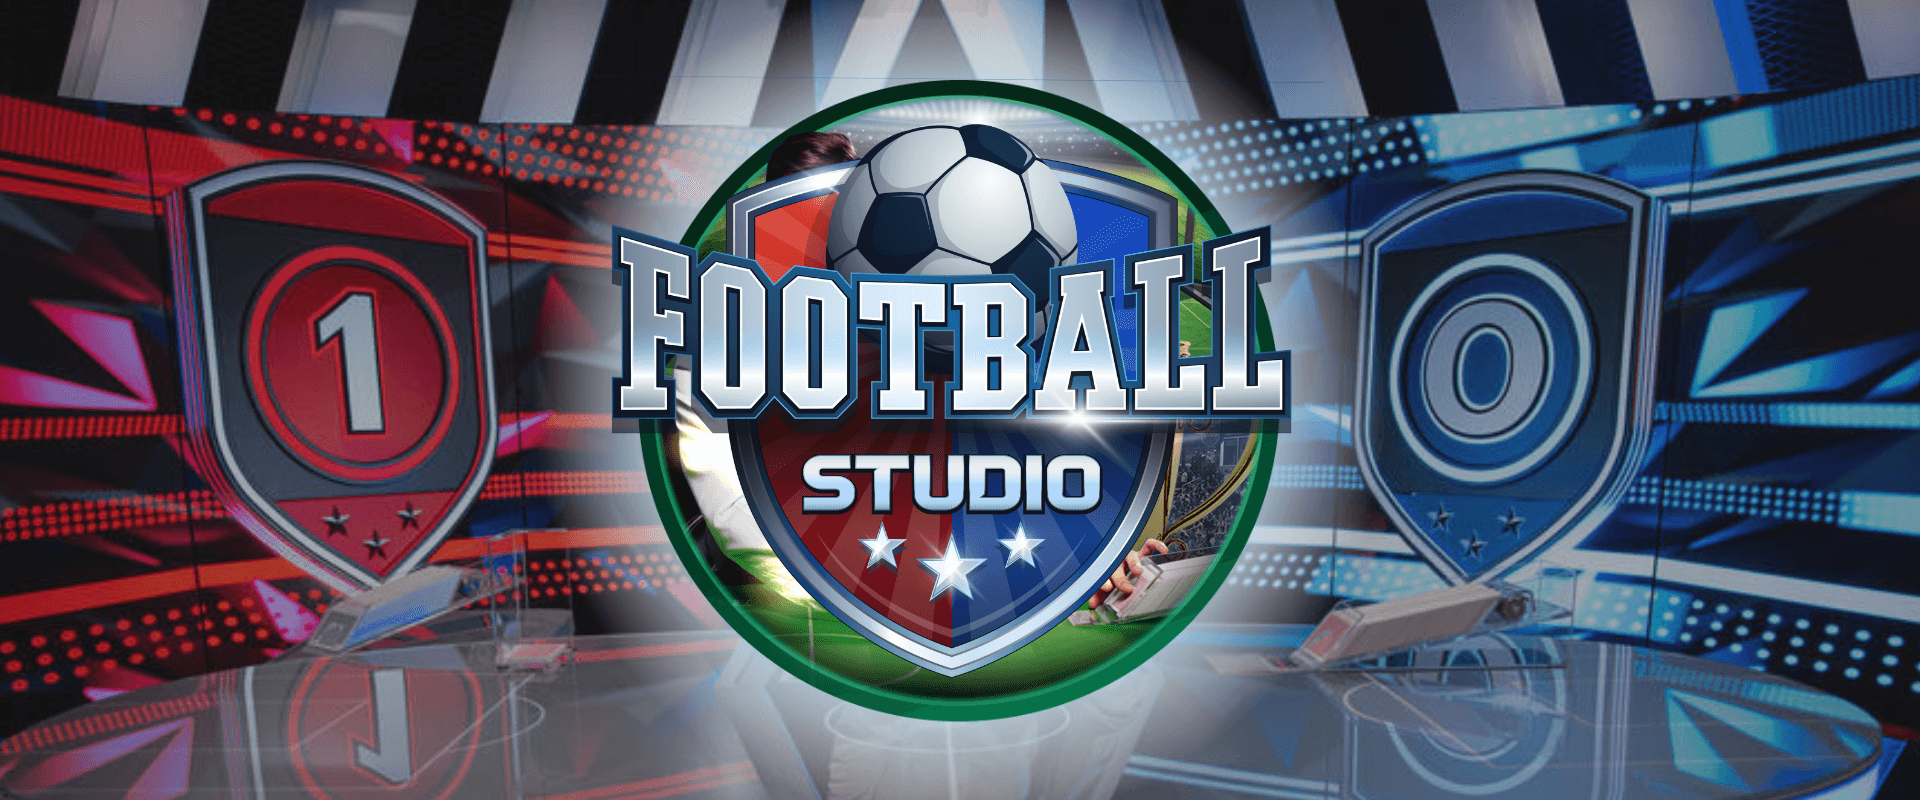 Football Studio Casino - A New Way To Make More Money